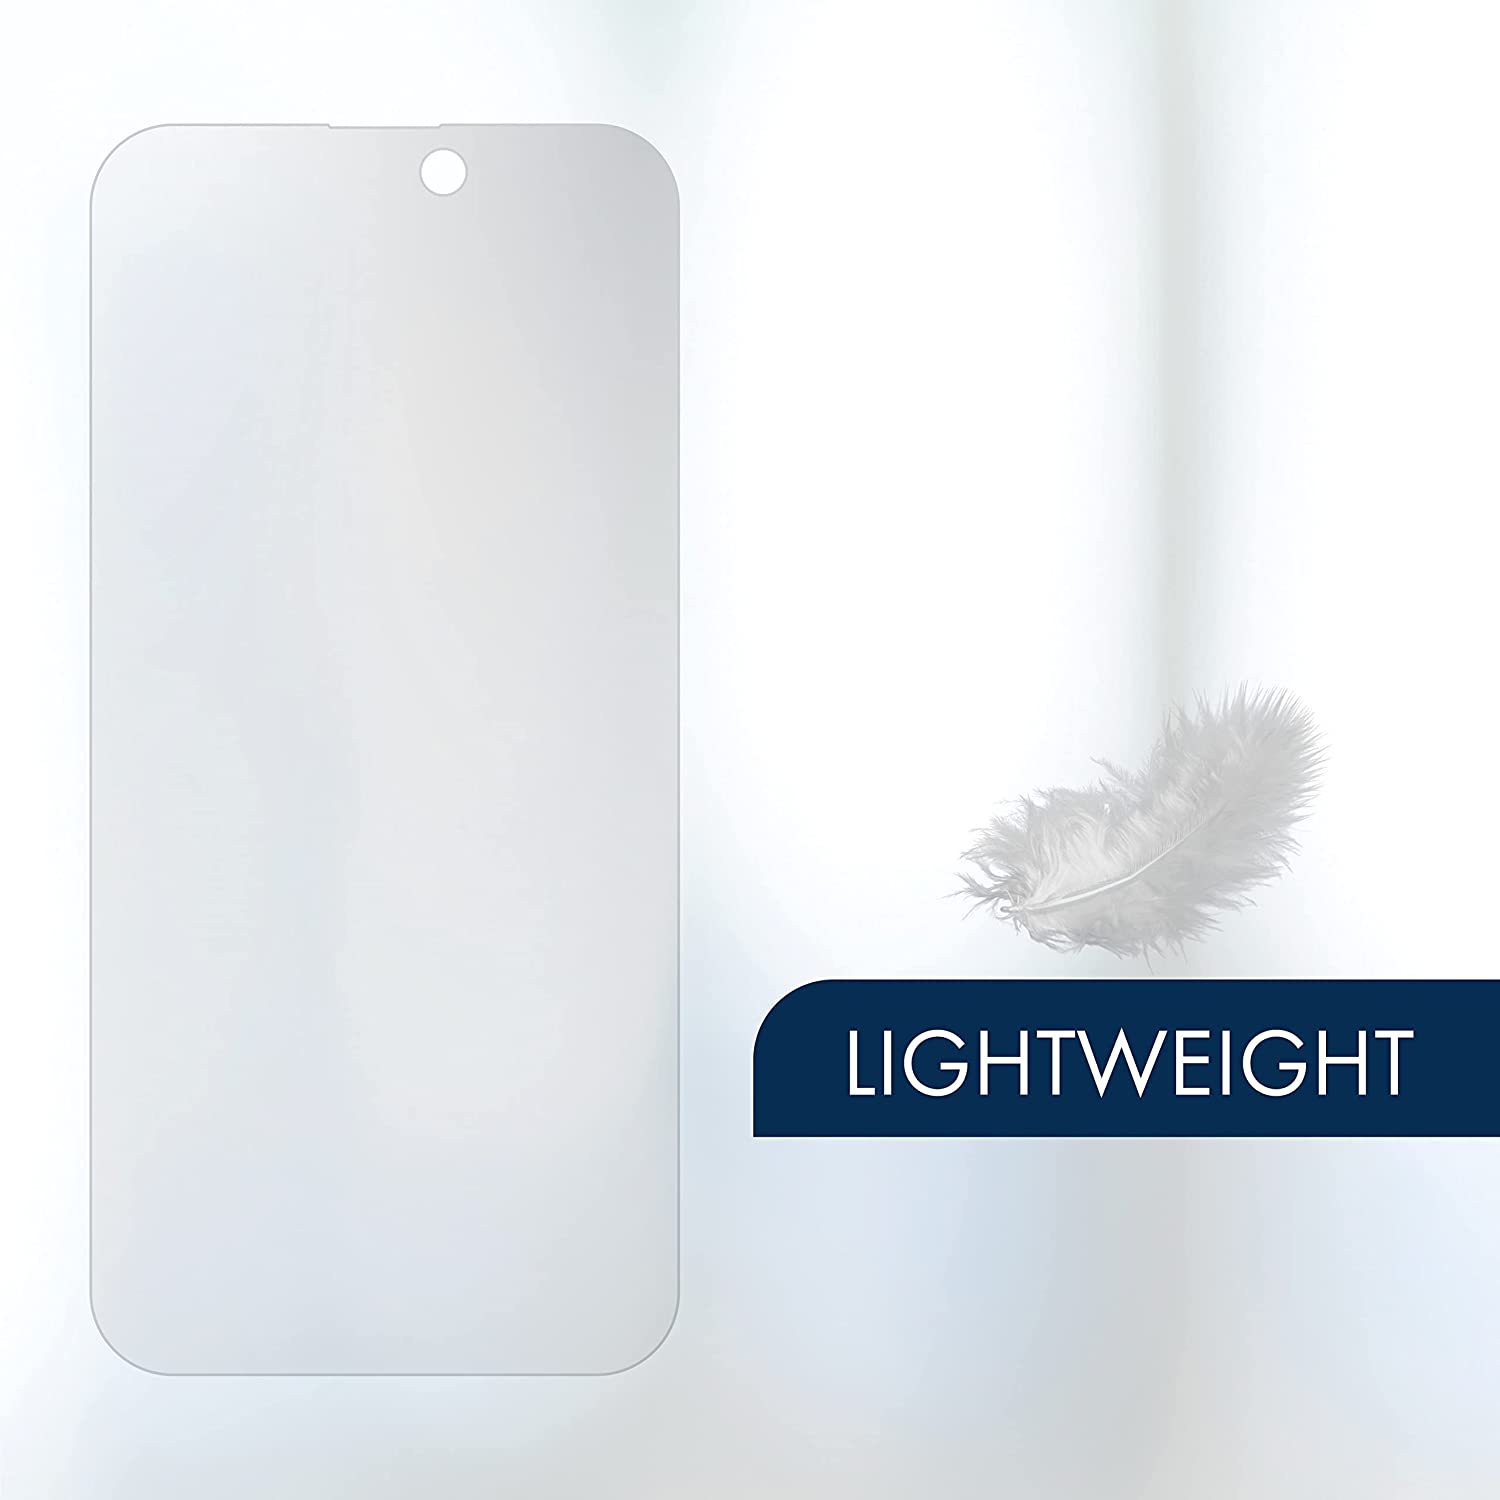 Samsung Galaxy Tab 2 7.0 Screen Protector + White Carbon Fiber Skin Protector